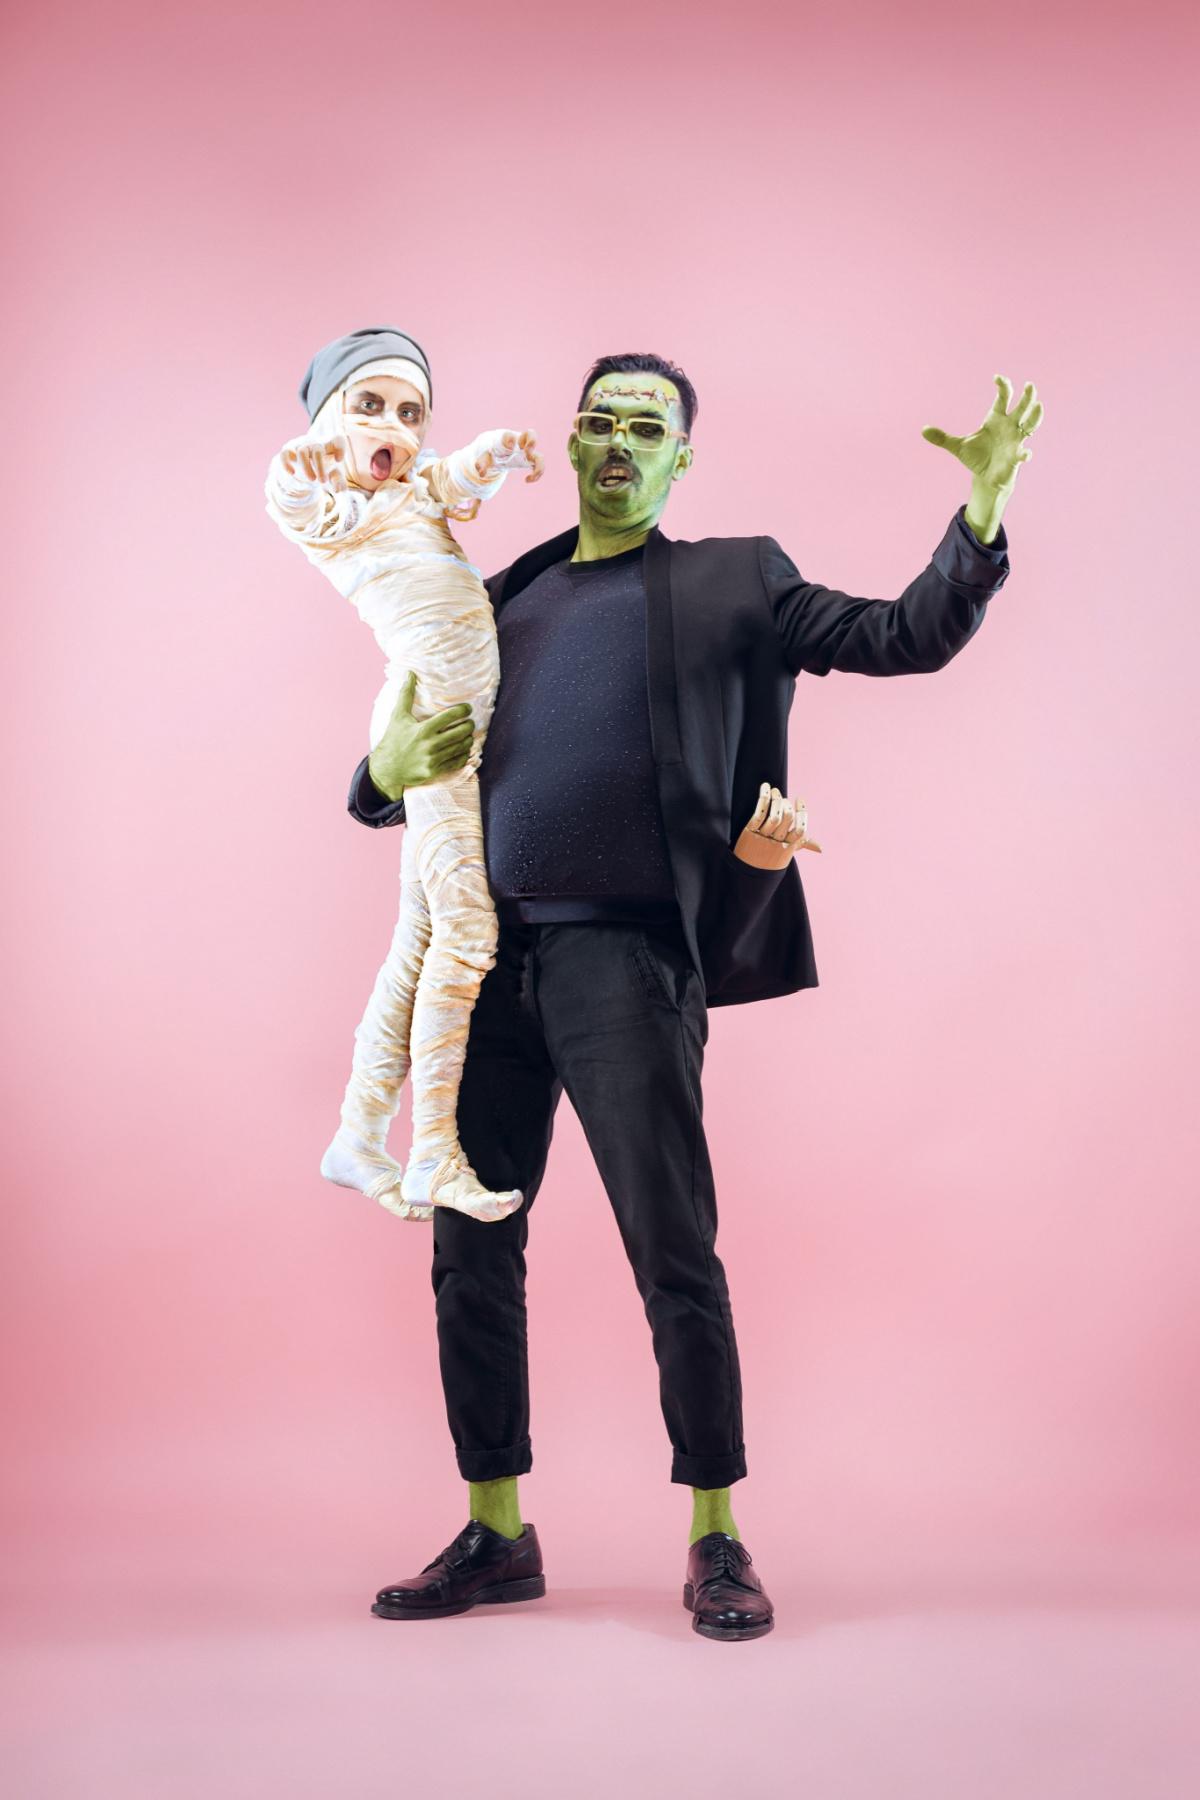 A man wearing a DIY Frankenstein costume holding a child wearing a diy mummy Halloween costume against a pink wall.